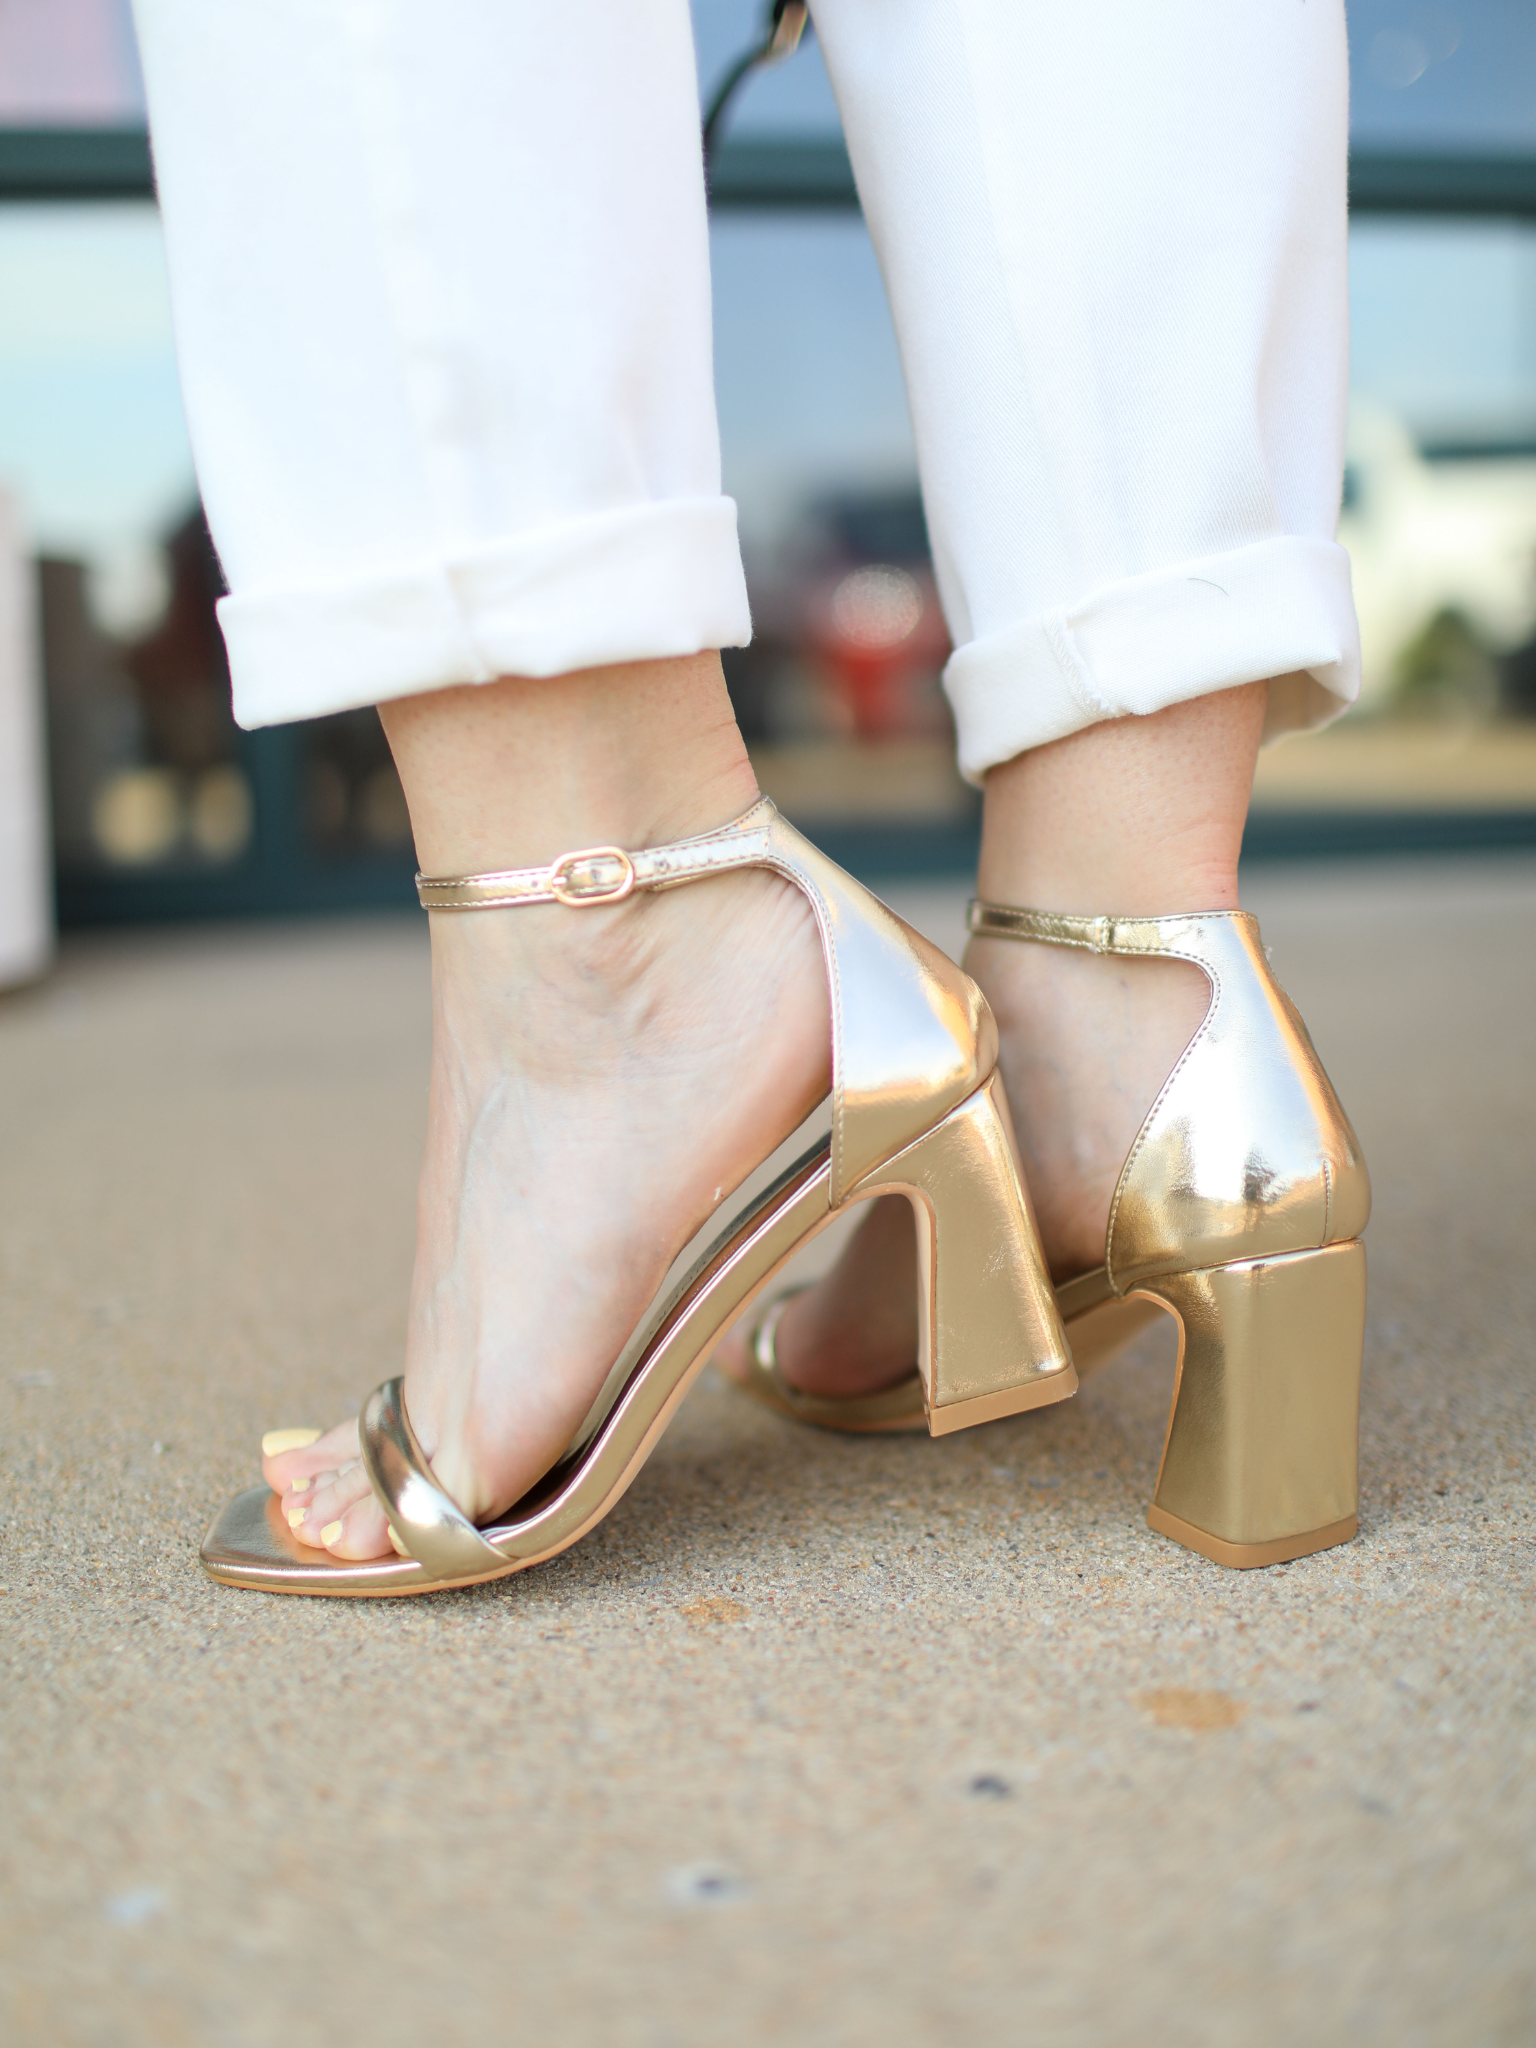 Steve Madden Sane Metallic Gold Leather Ankle Strap Heels 8 | eBay